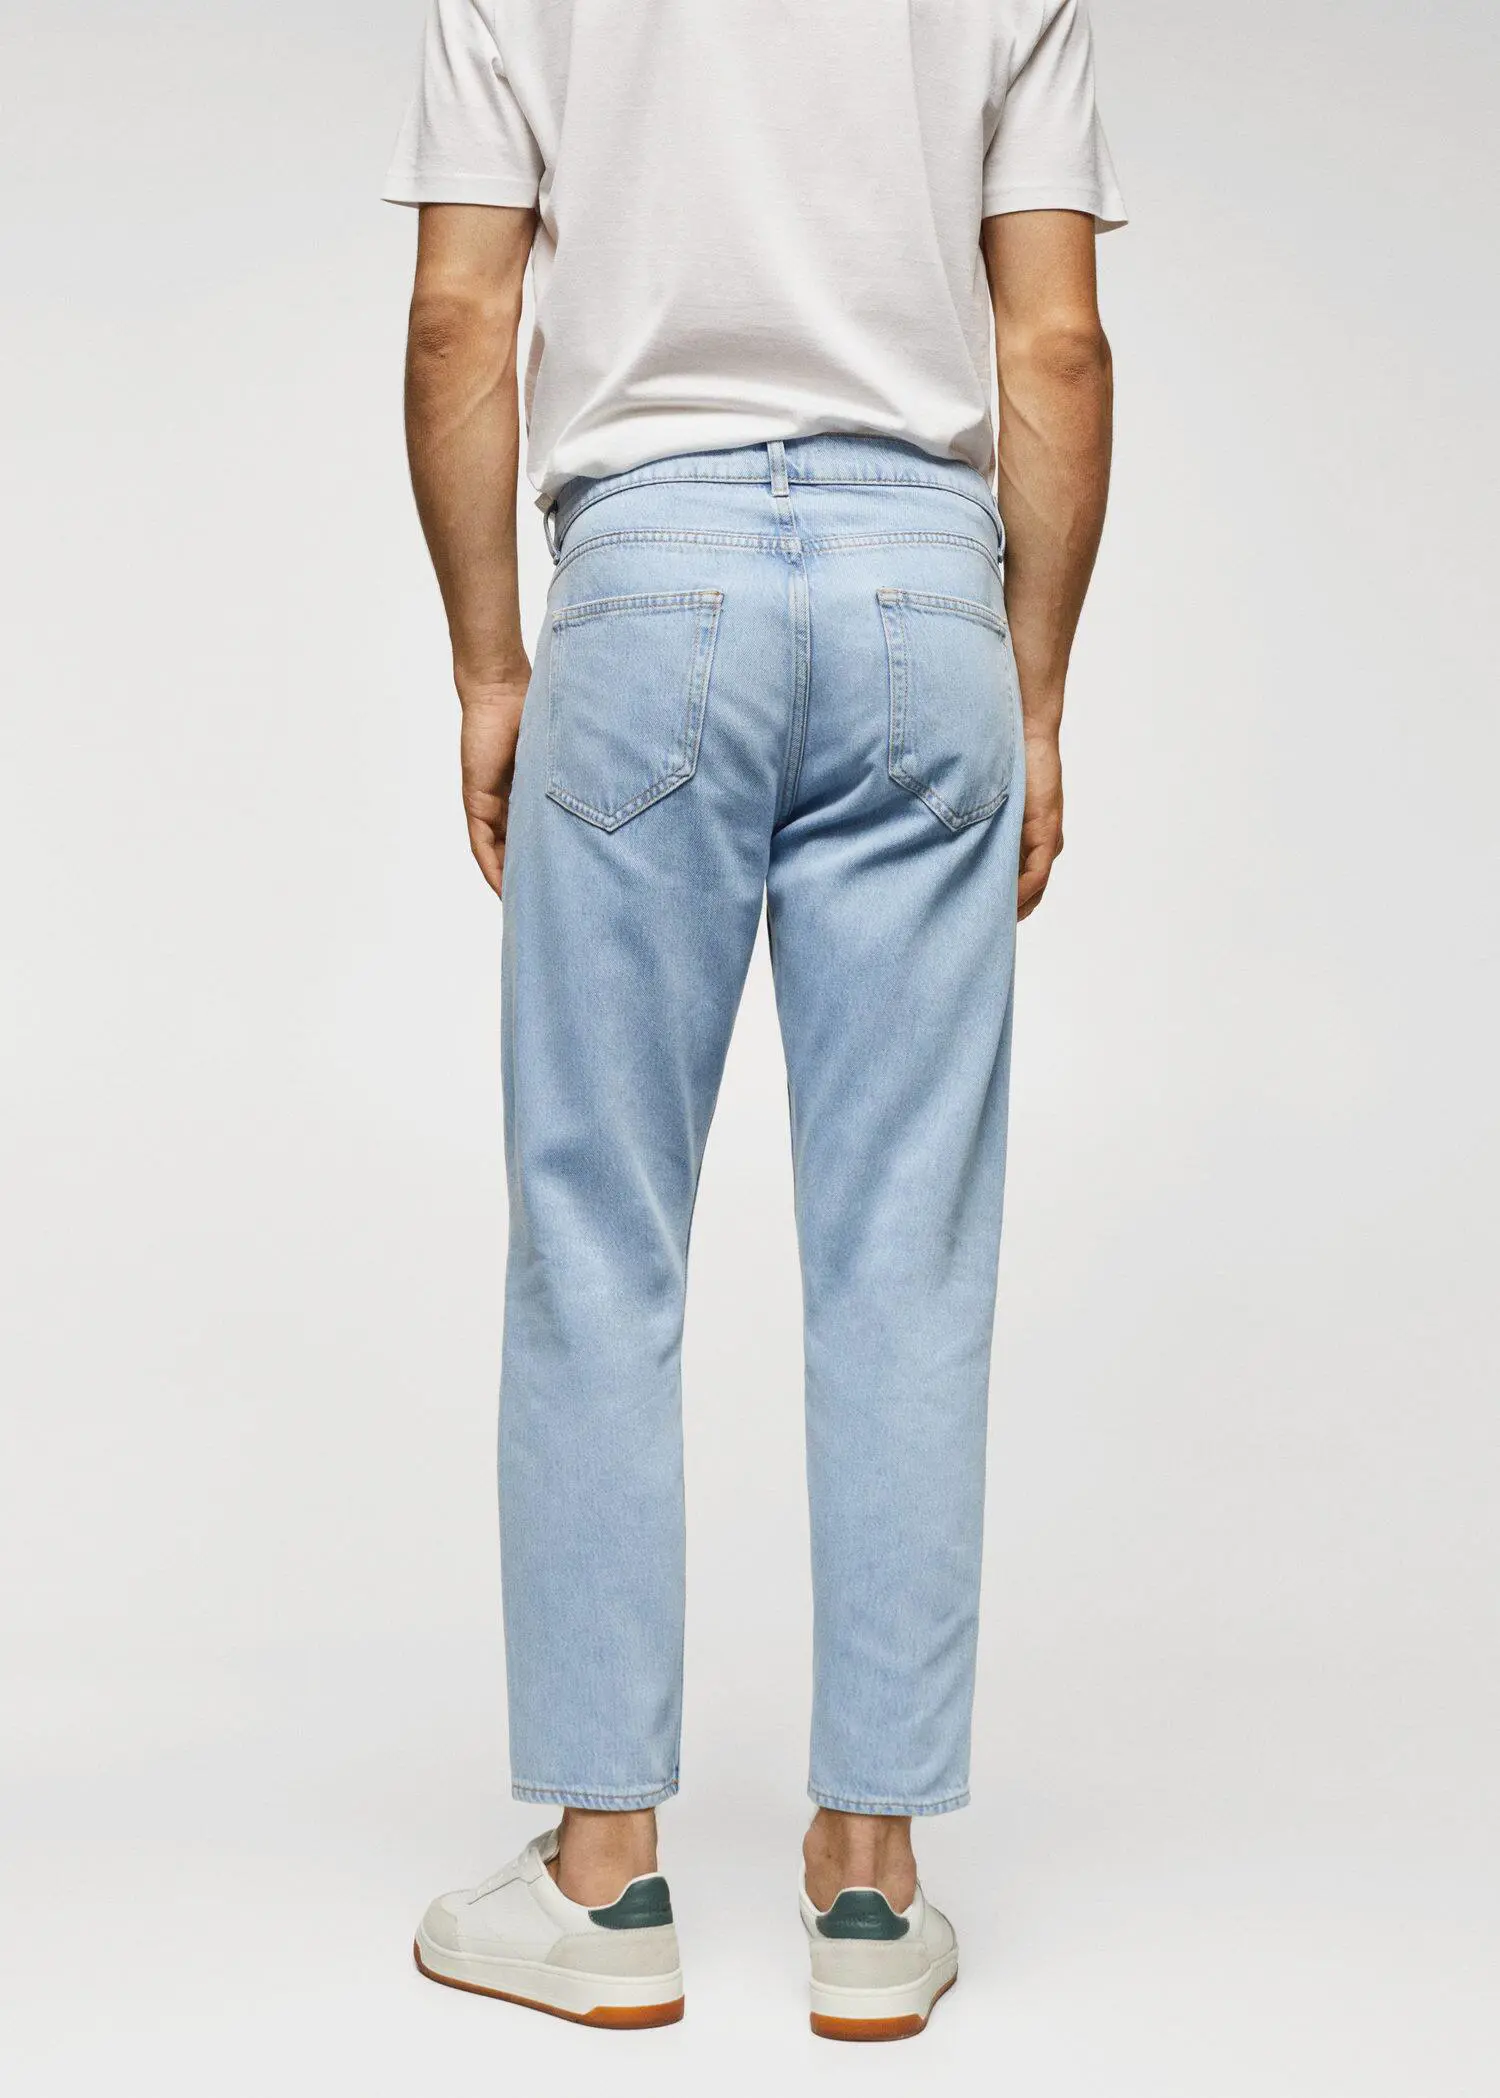 Mango Jeans leggeri tapered-fit lavaggio chiaro. 3